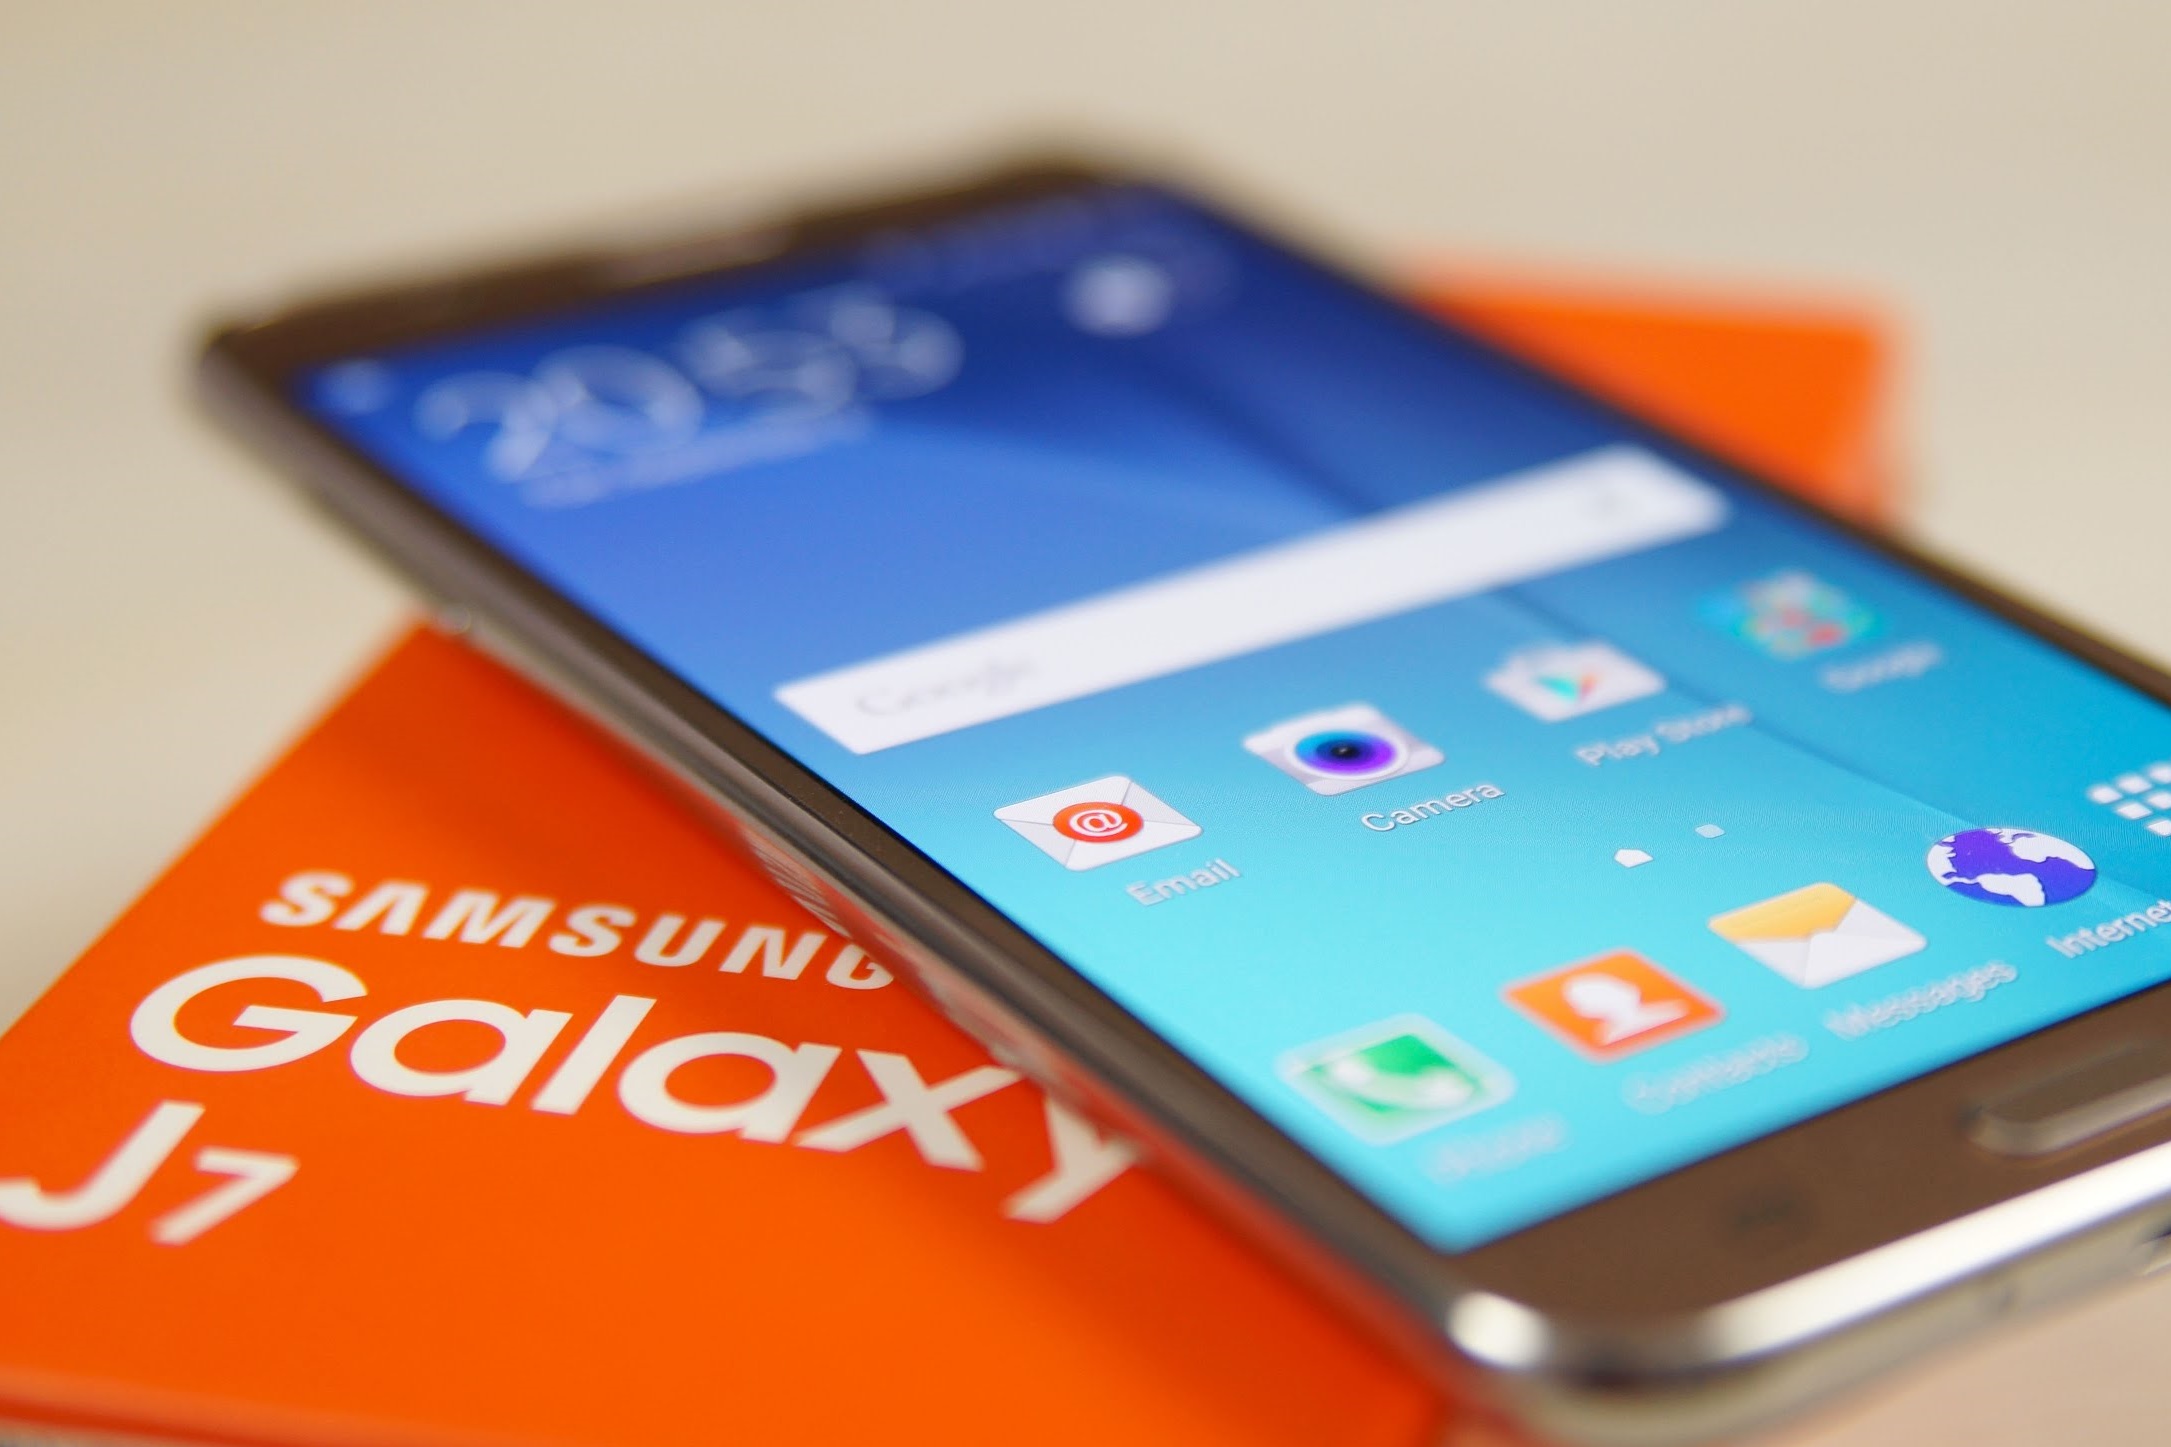 Samsung Galaxy Y — Meu Samsung Galaxy foi roubado, é possível rastreá-lo?